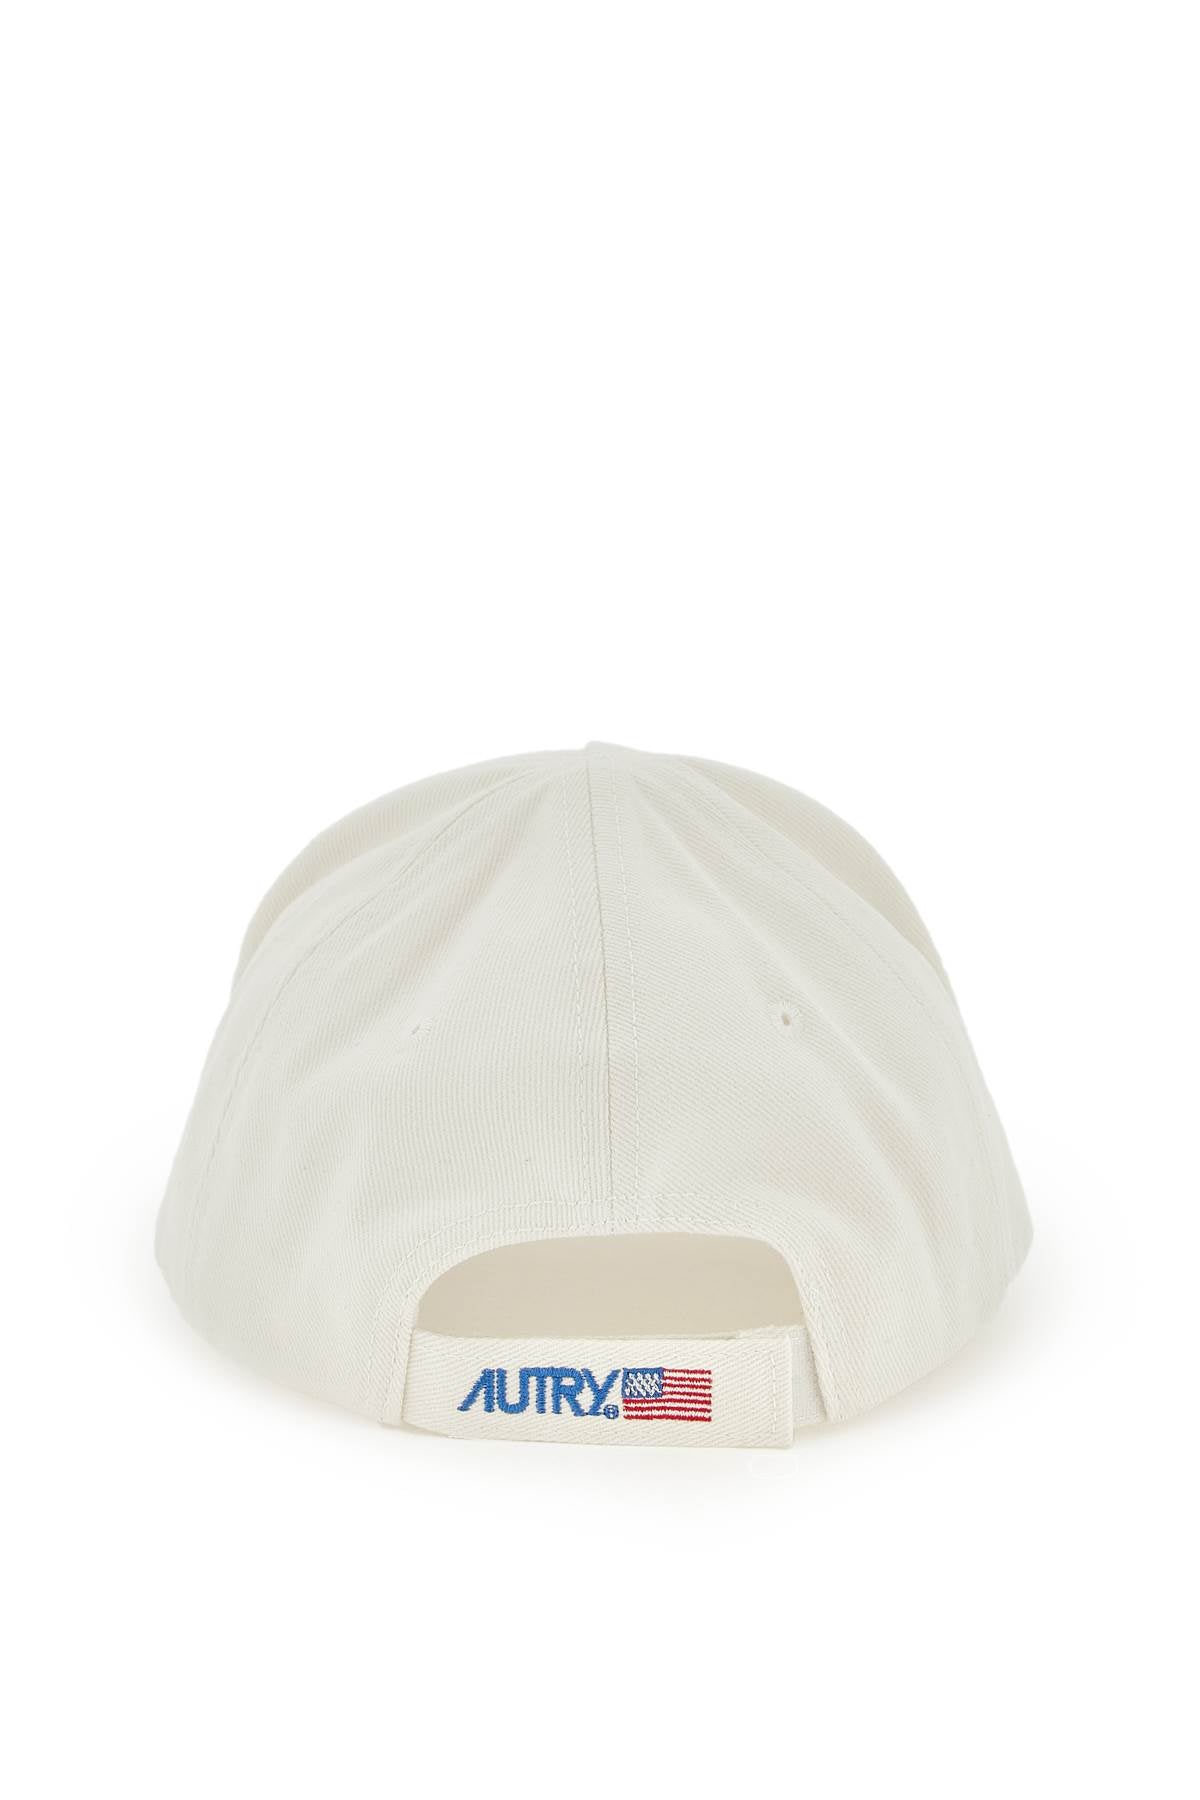 Autry 'iconic logo' baseball cap-2